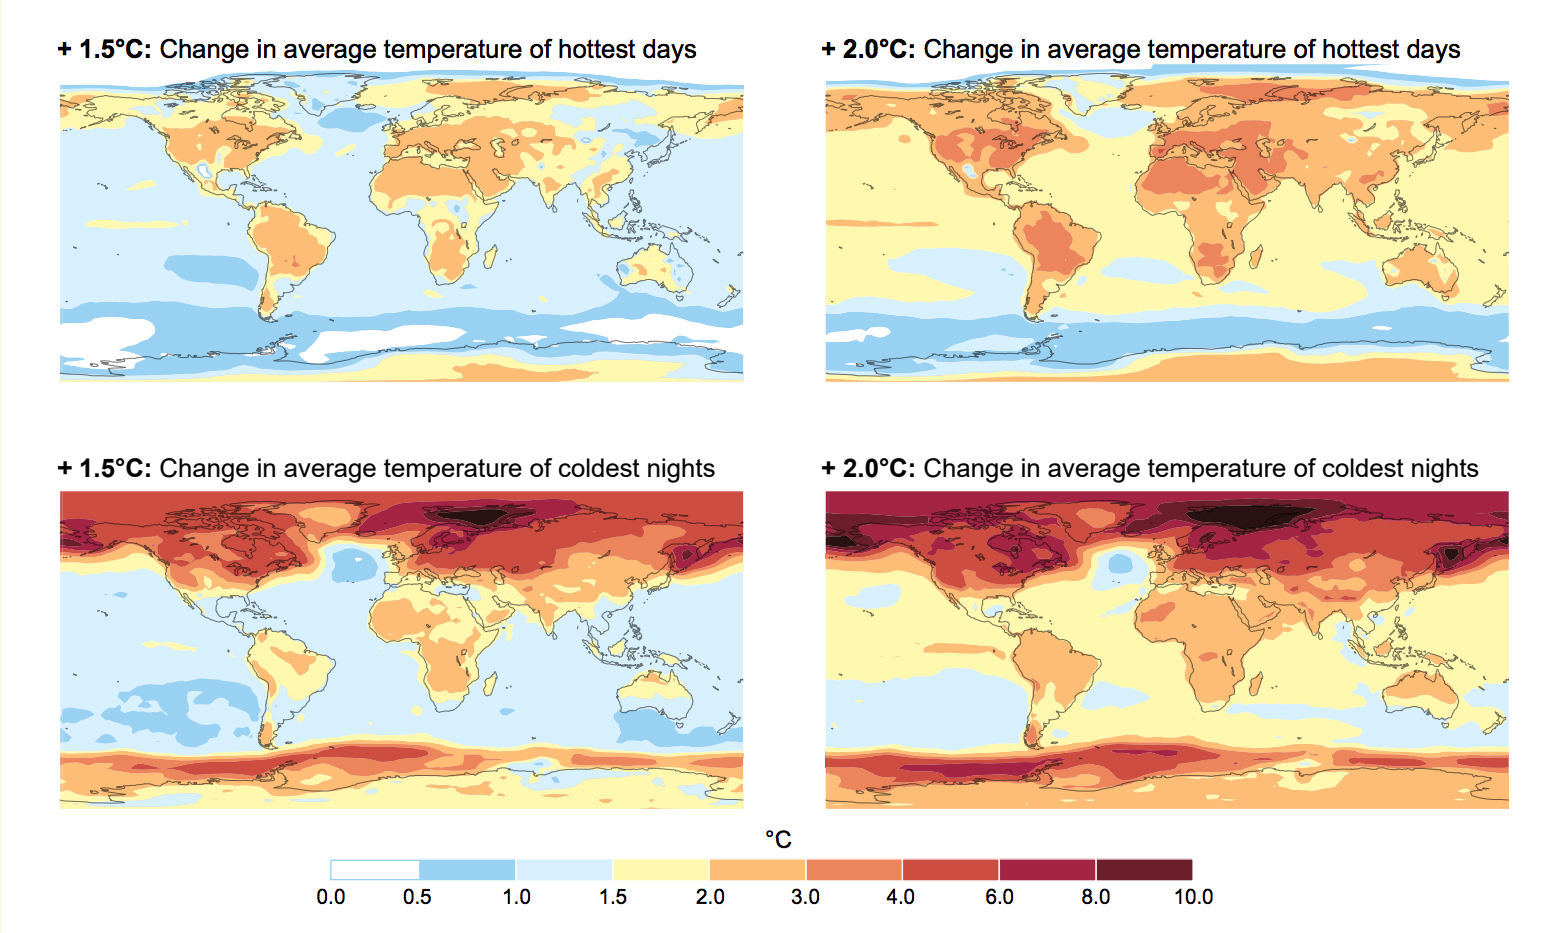 Temperature change is not uniform across the globe.